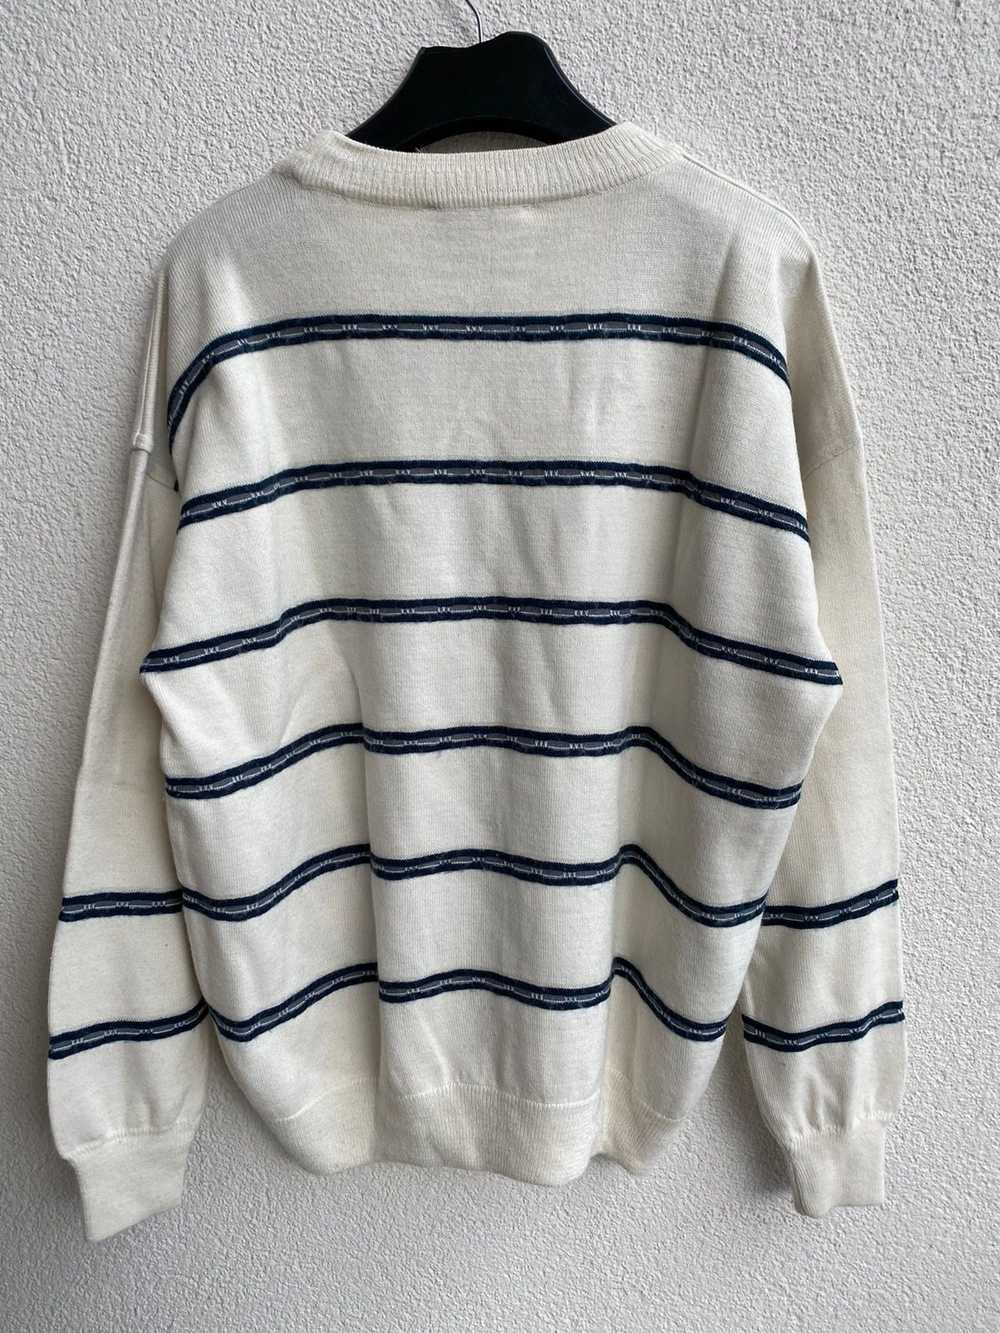 Yves Saint Laurent 90’s Wool YSL Sweater Cream Wh… - image 12